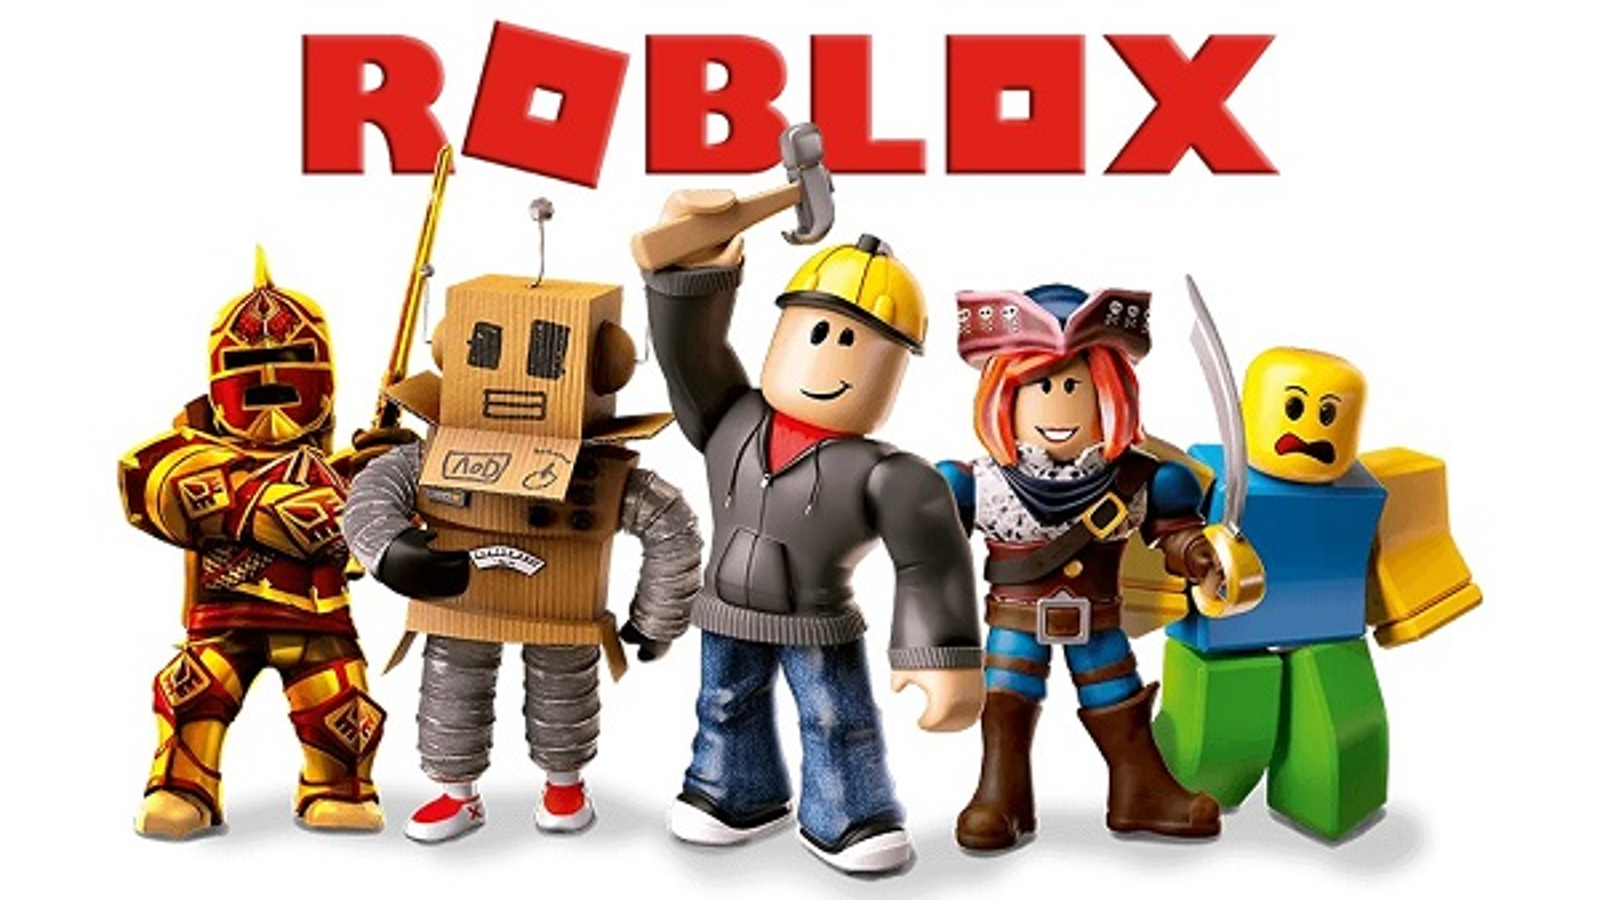 Roblox business model criticized as exploiting children